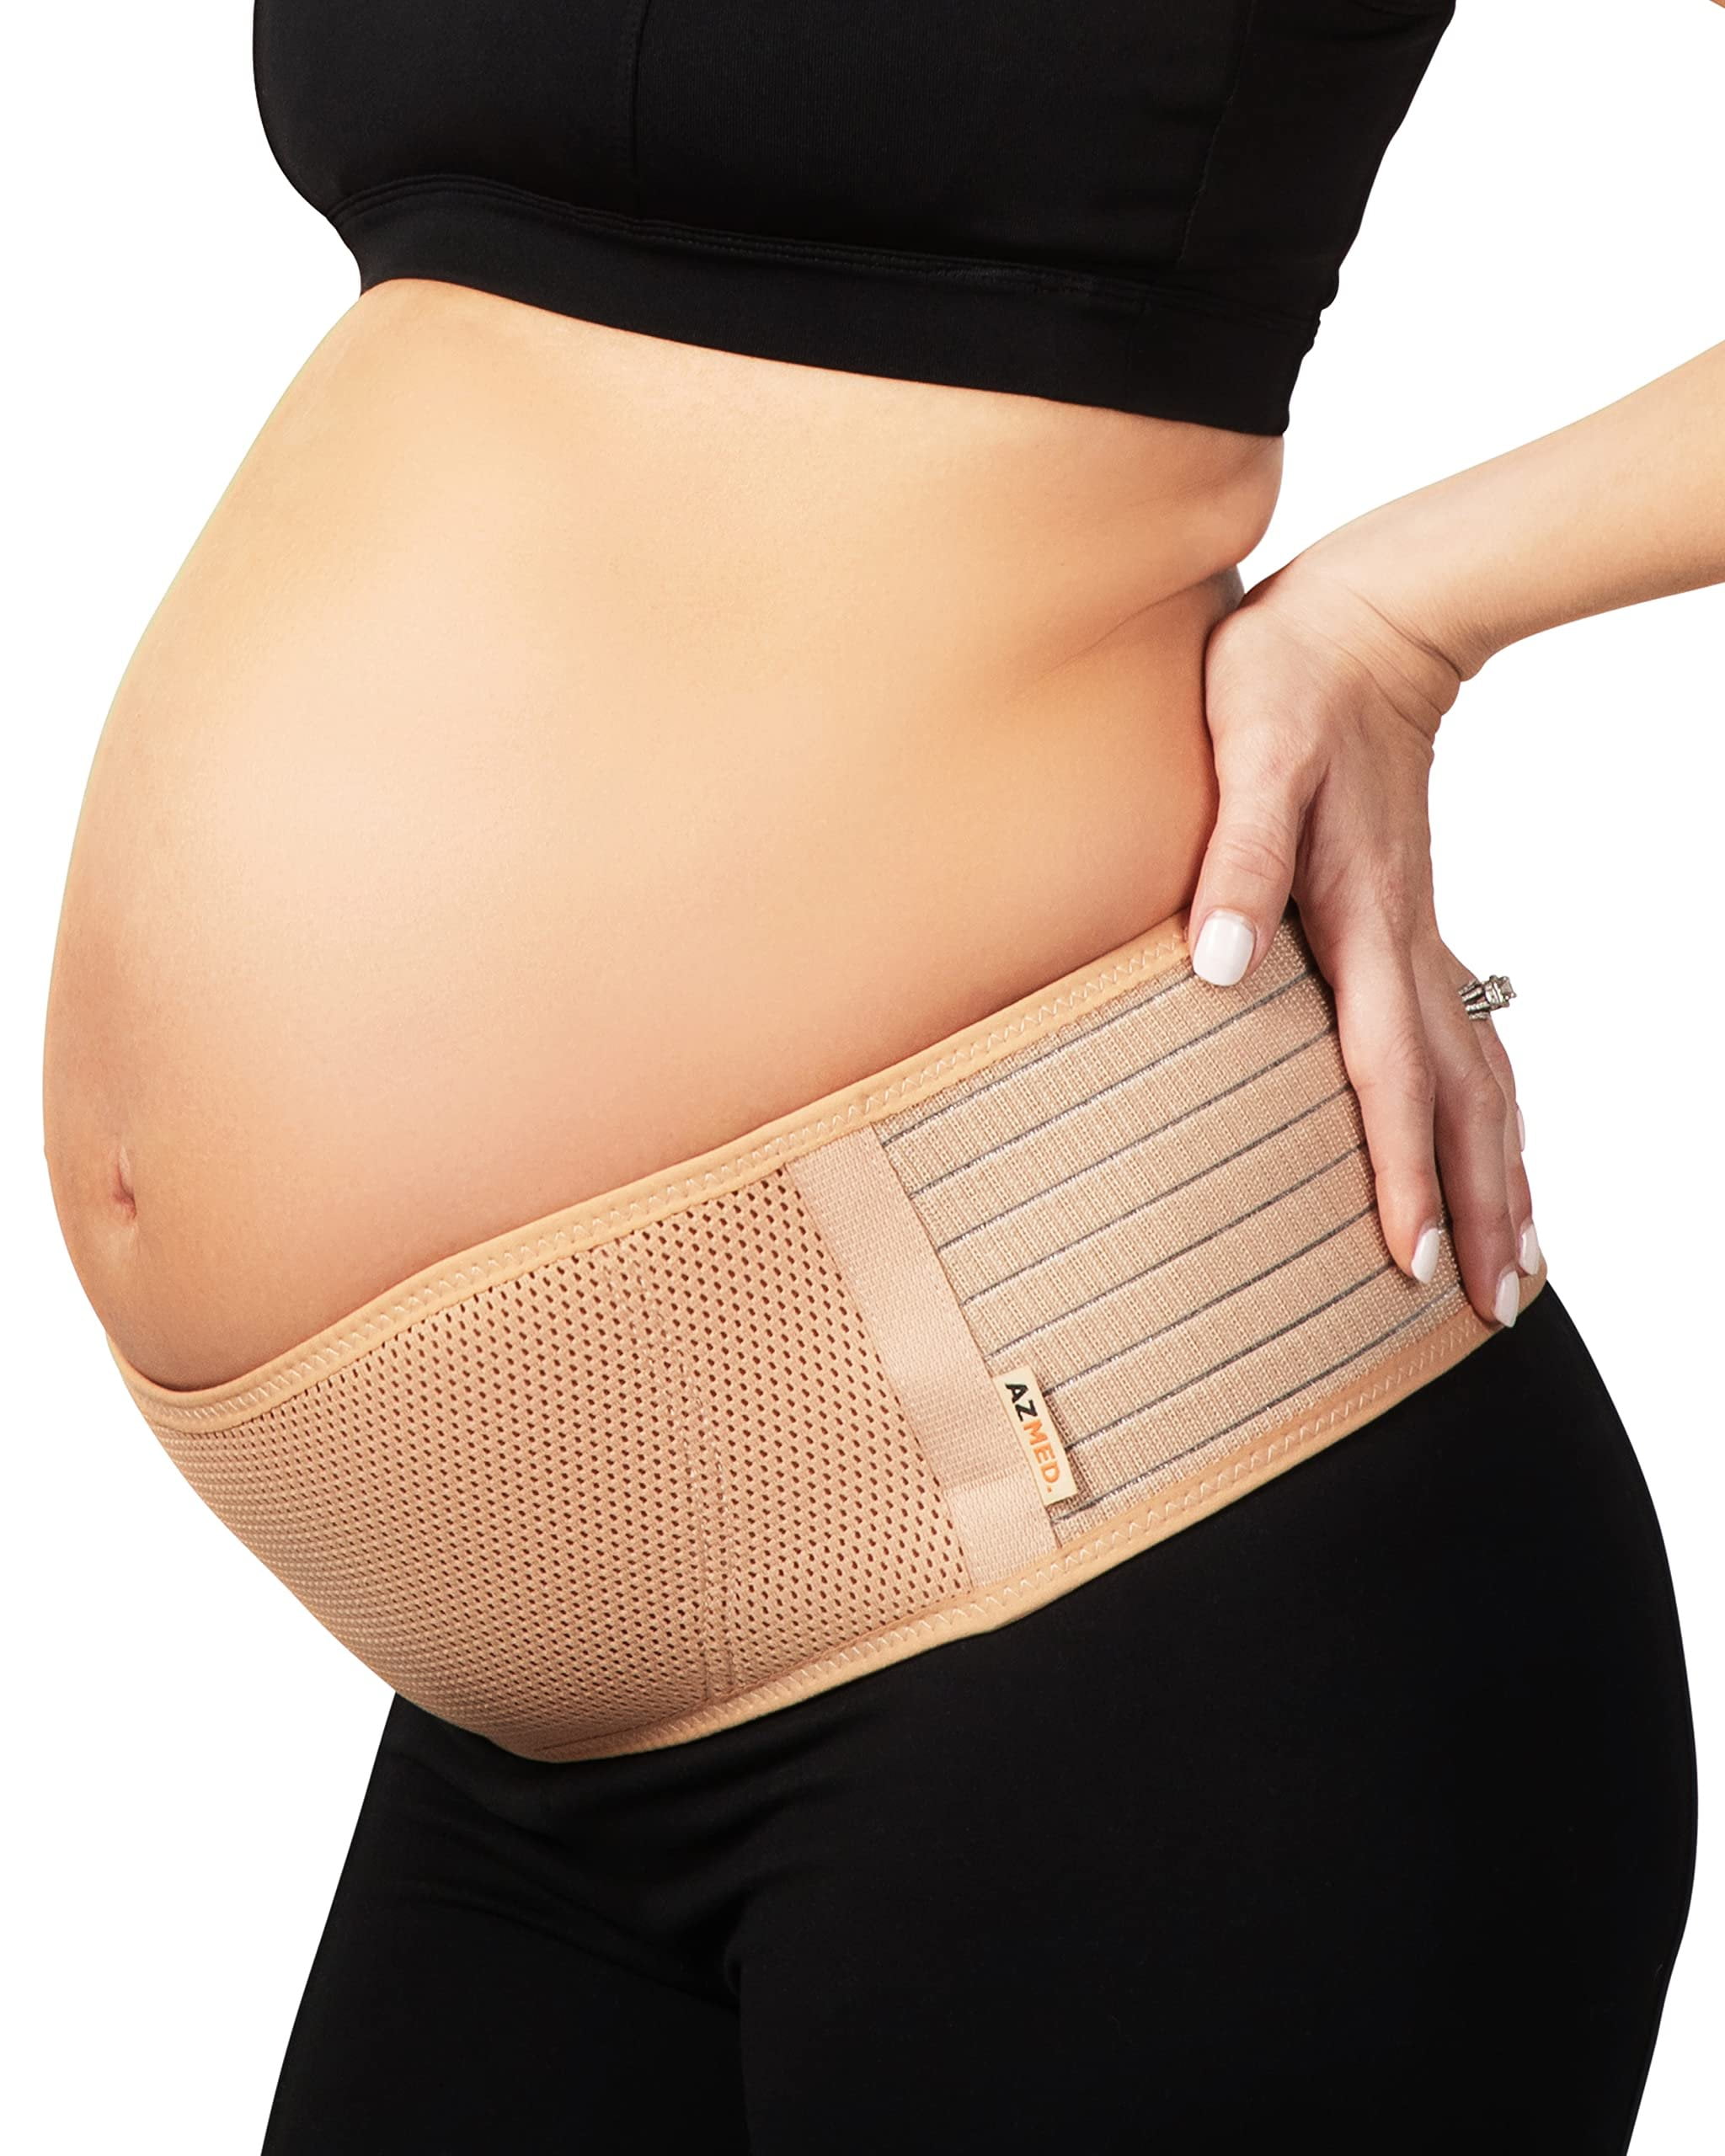 Frida Mom Postpartum Abdominal Binder, Pregnancy Support Belt with  Adjustable Strap, Grey, One Size 